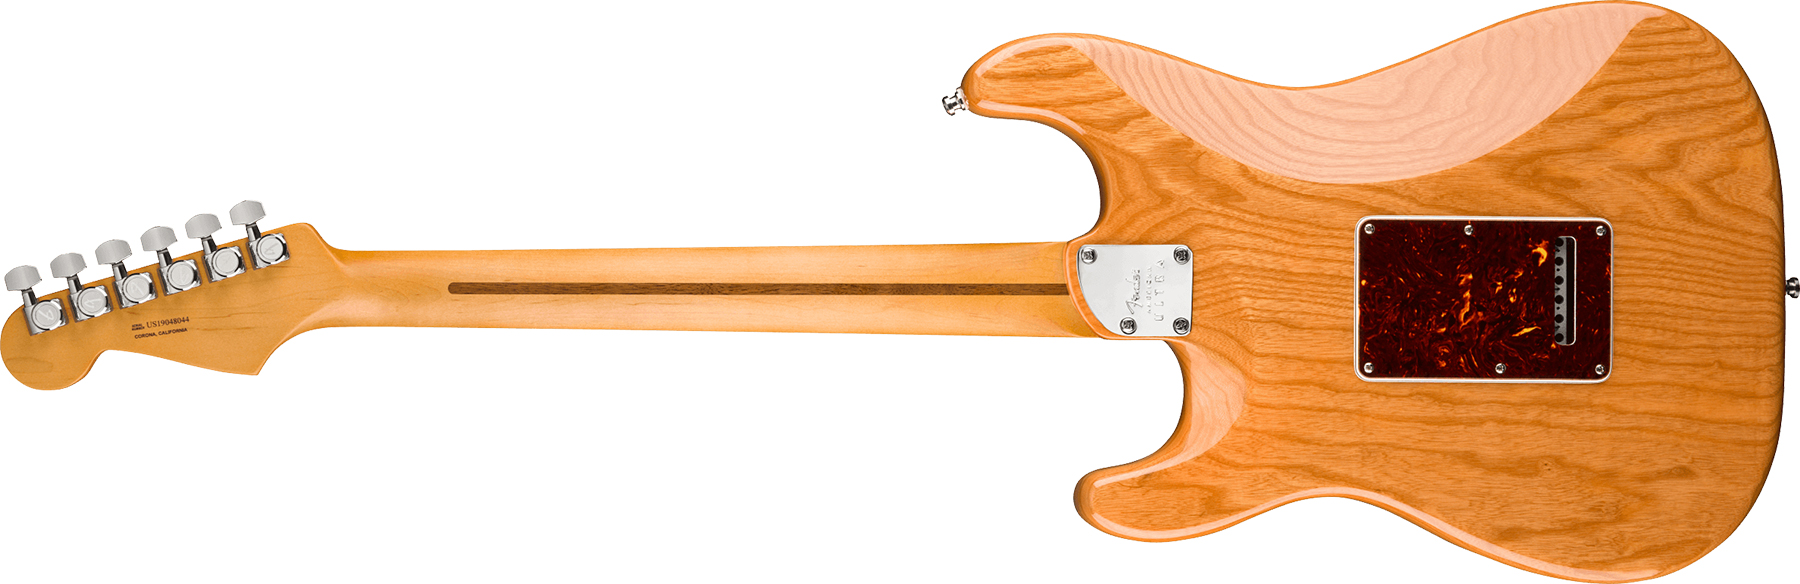 Fender Strat American Ultra Hss 2019 Usa Rw - Aged Natural - E-Gitarre in Str-Form - Variation 1